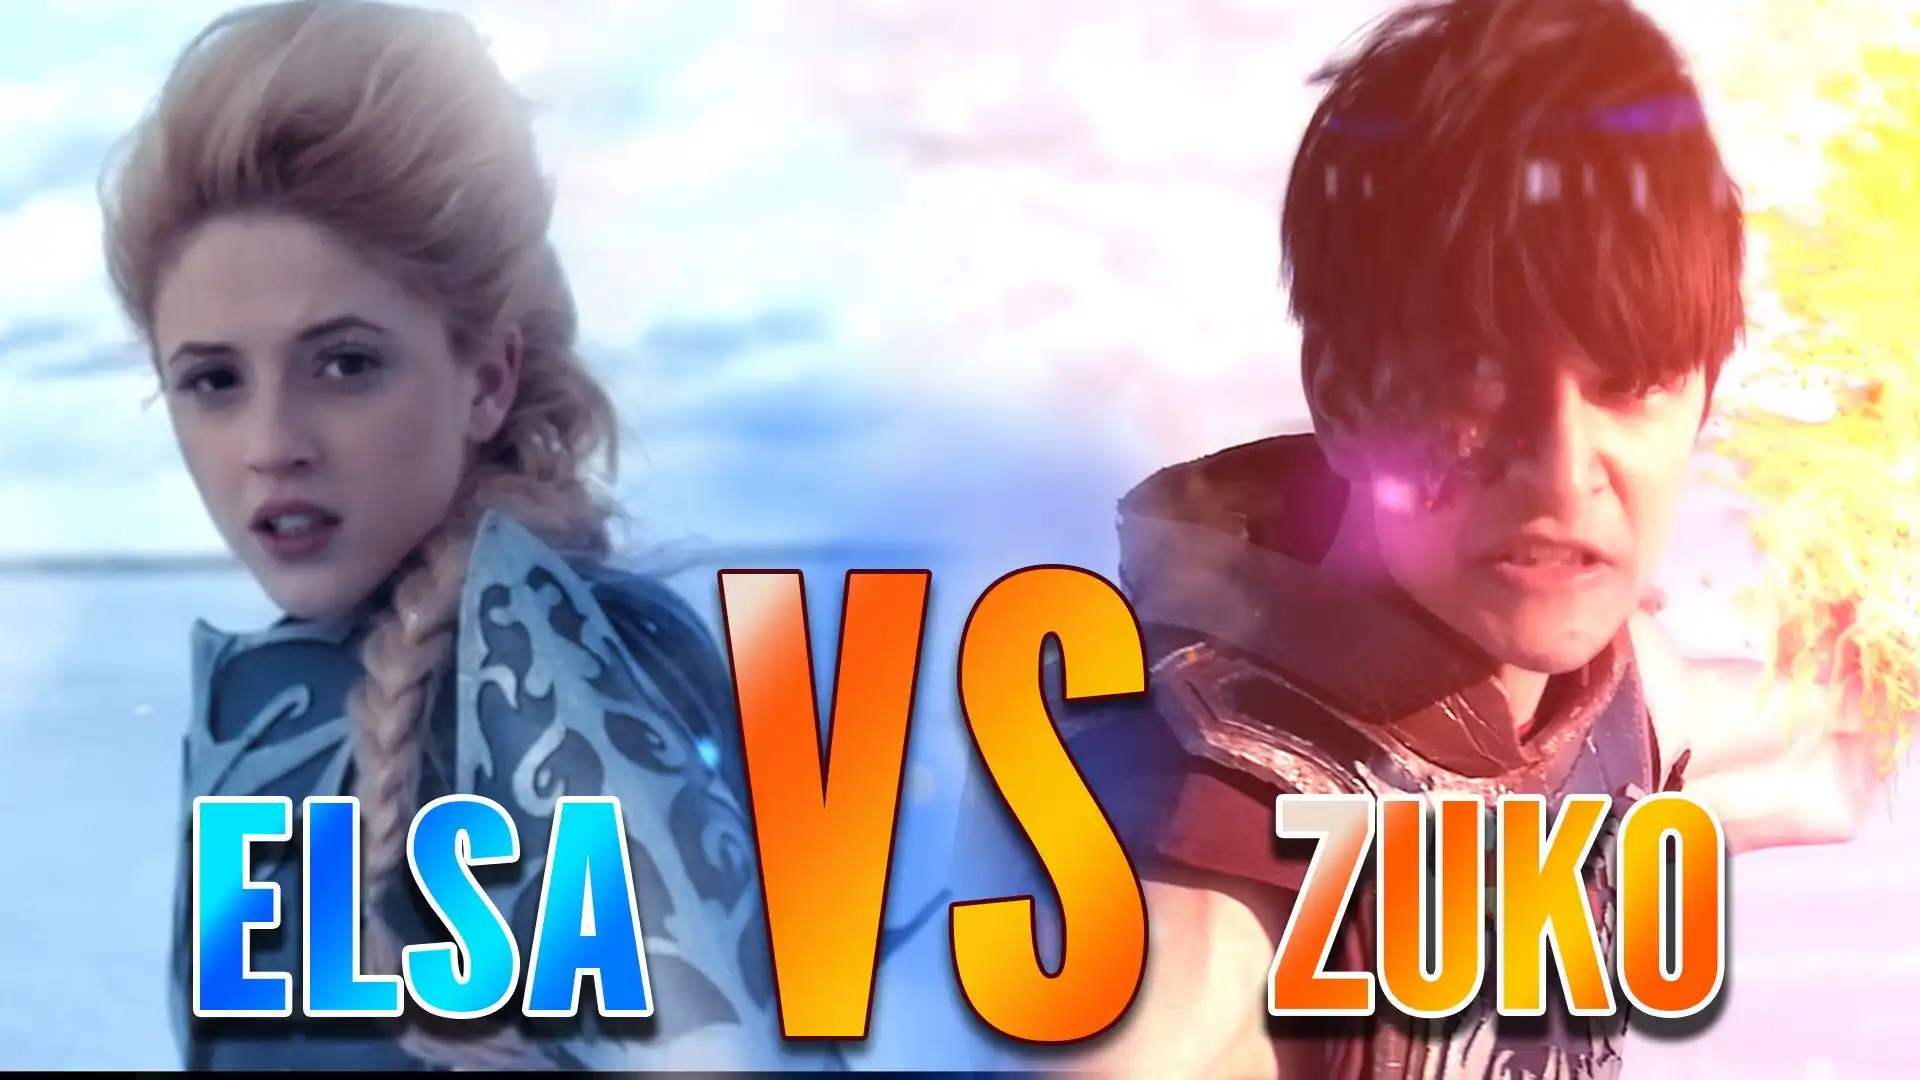 ELSA (Frozen) vs. ZUKO (The Last AIrbender) LIVE ACTION FIGHT [The Edge EP 2]